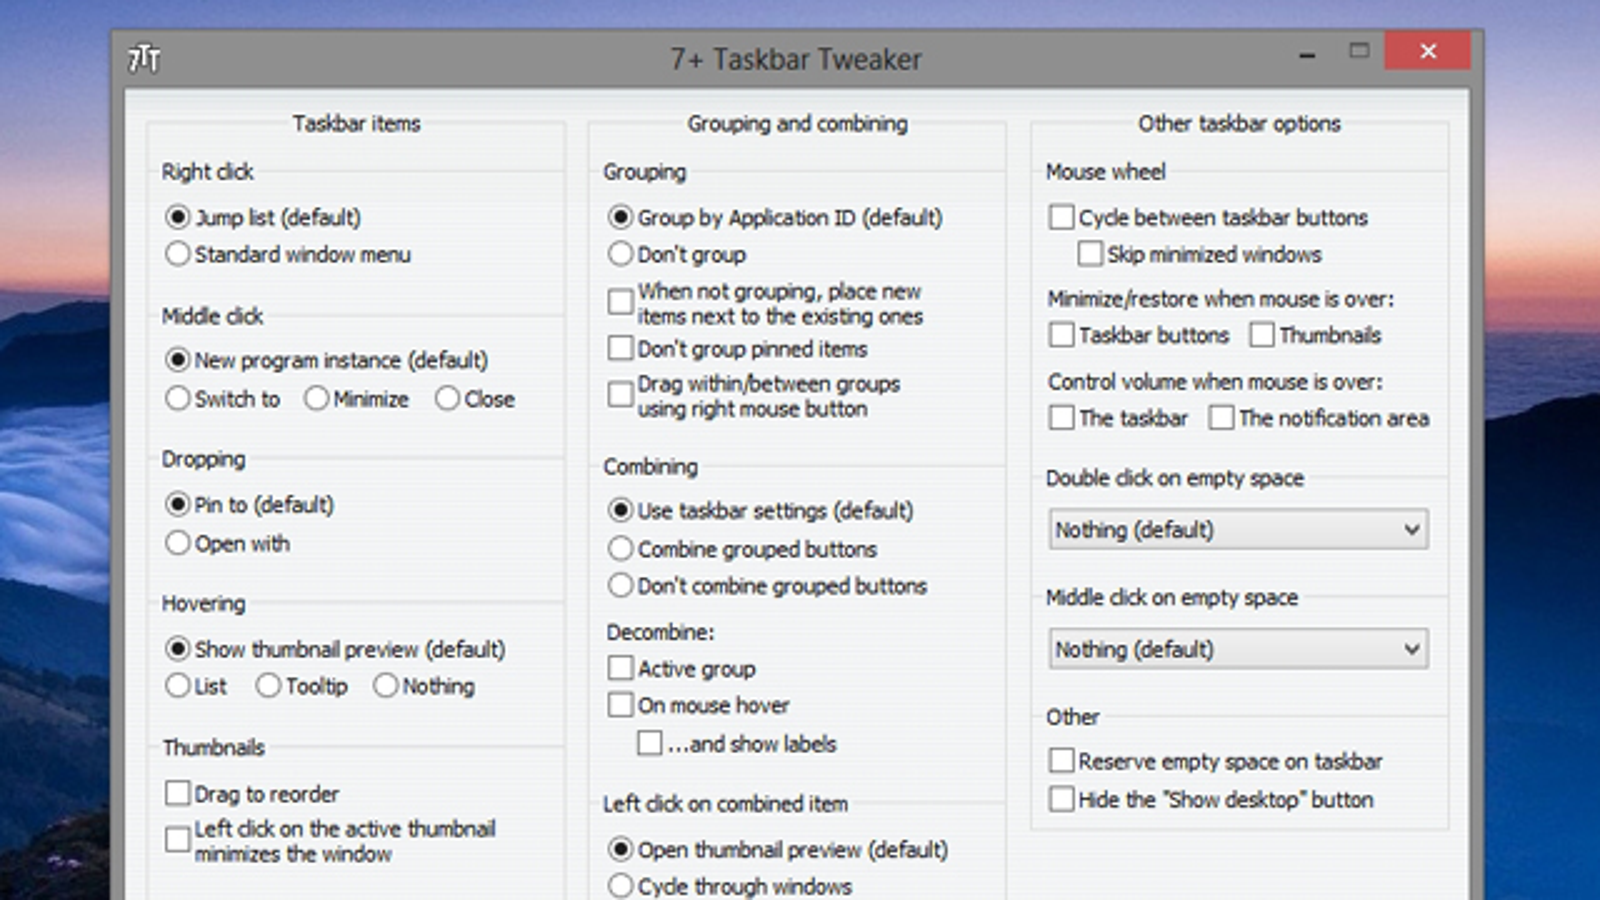 7+ Taskbar Tweaker 5.14.3.0 free downloads